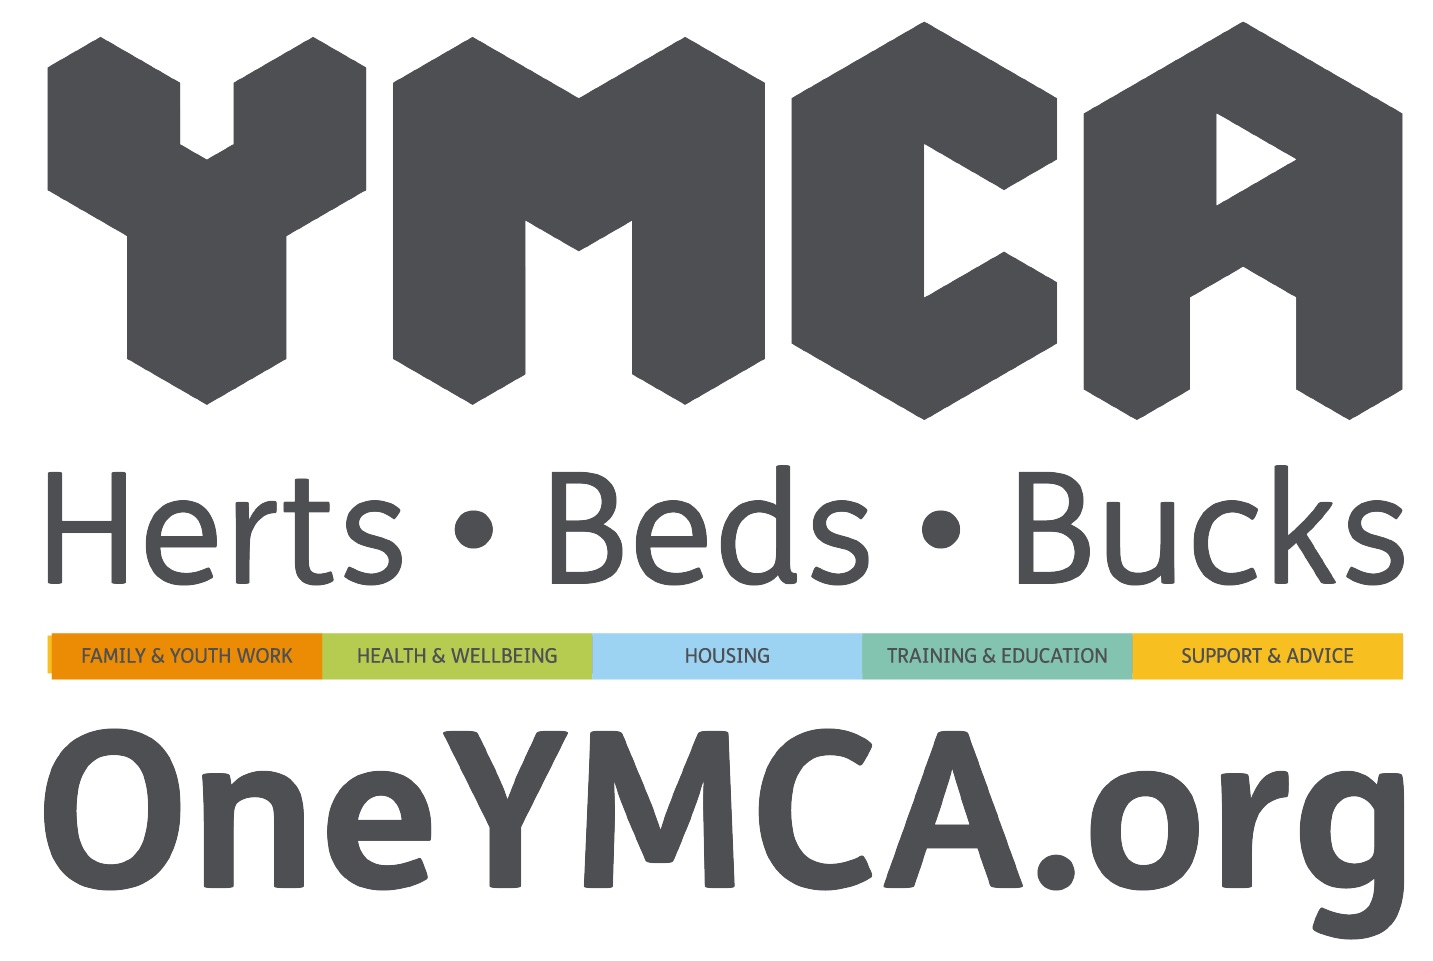 One YMCA Herts, Beds, Bucks logo.